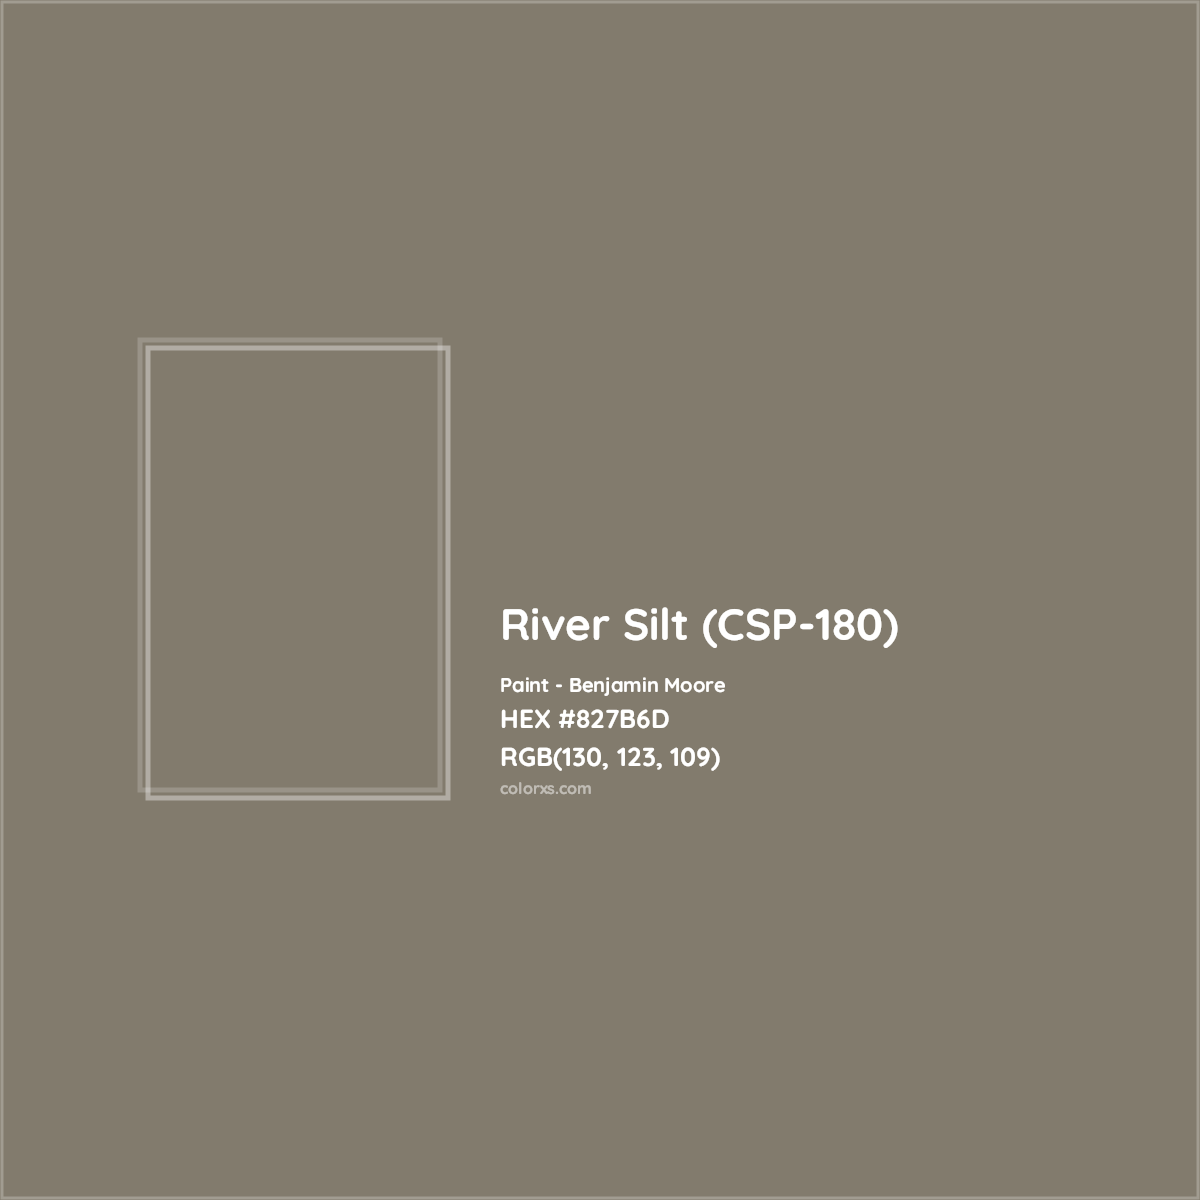 HEX #827B6D River Silt (CSP-180) Paint Benjamin Moore - Color Code